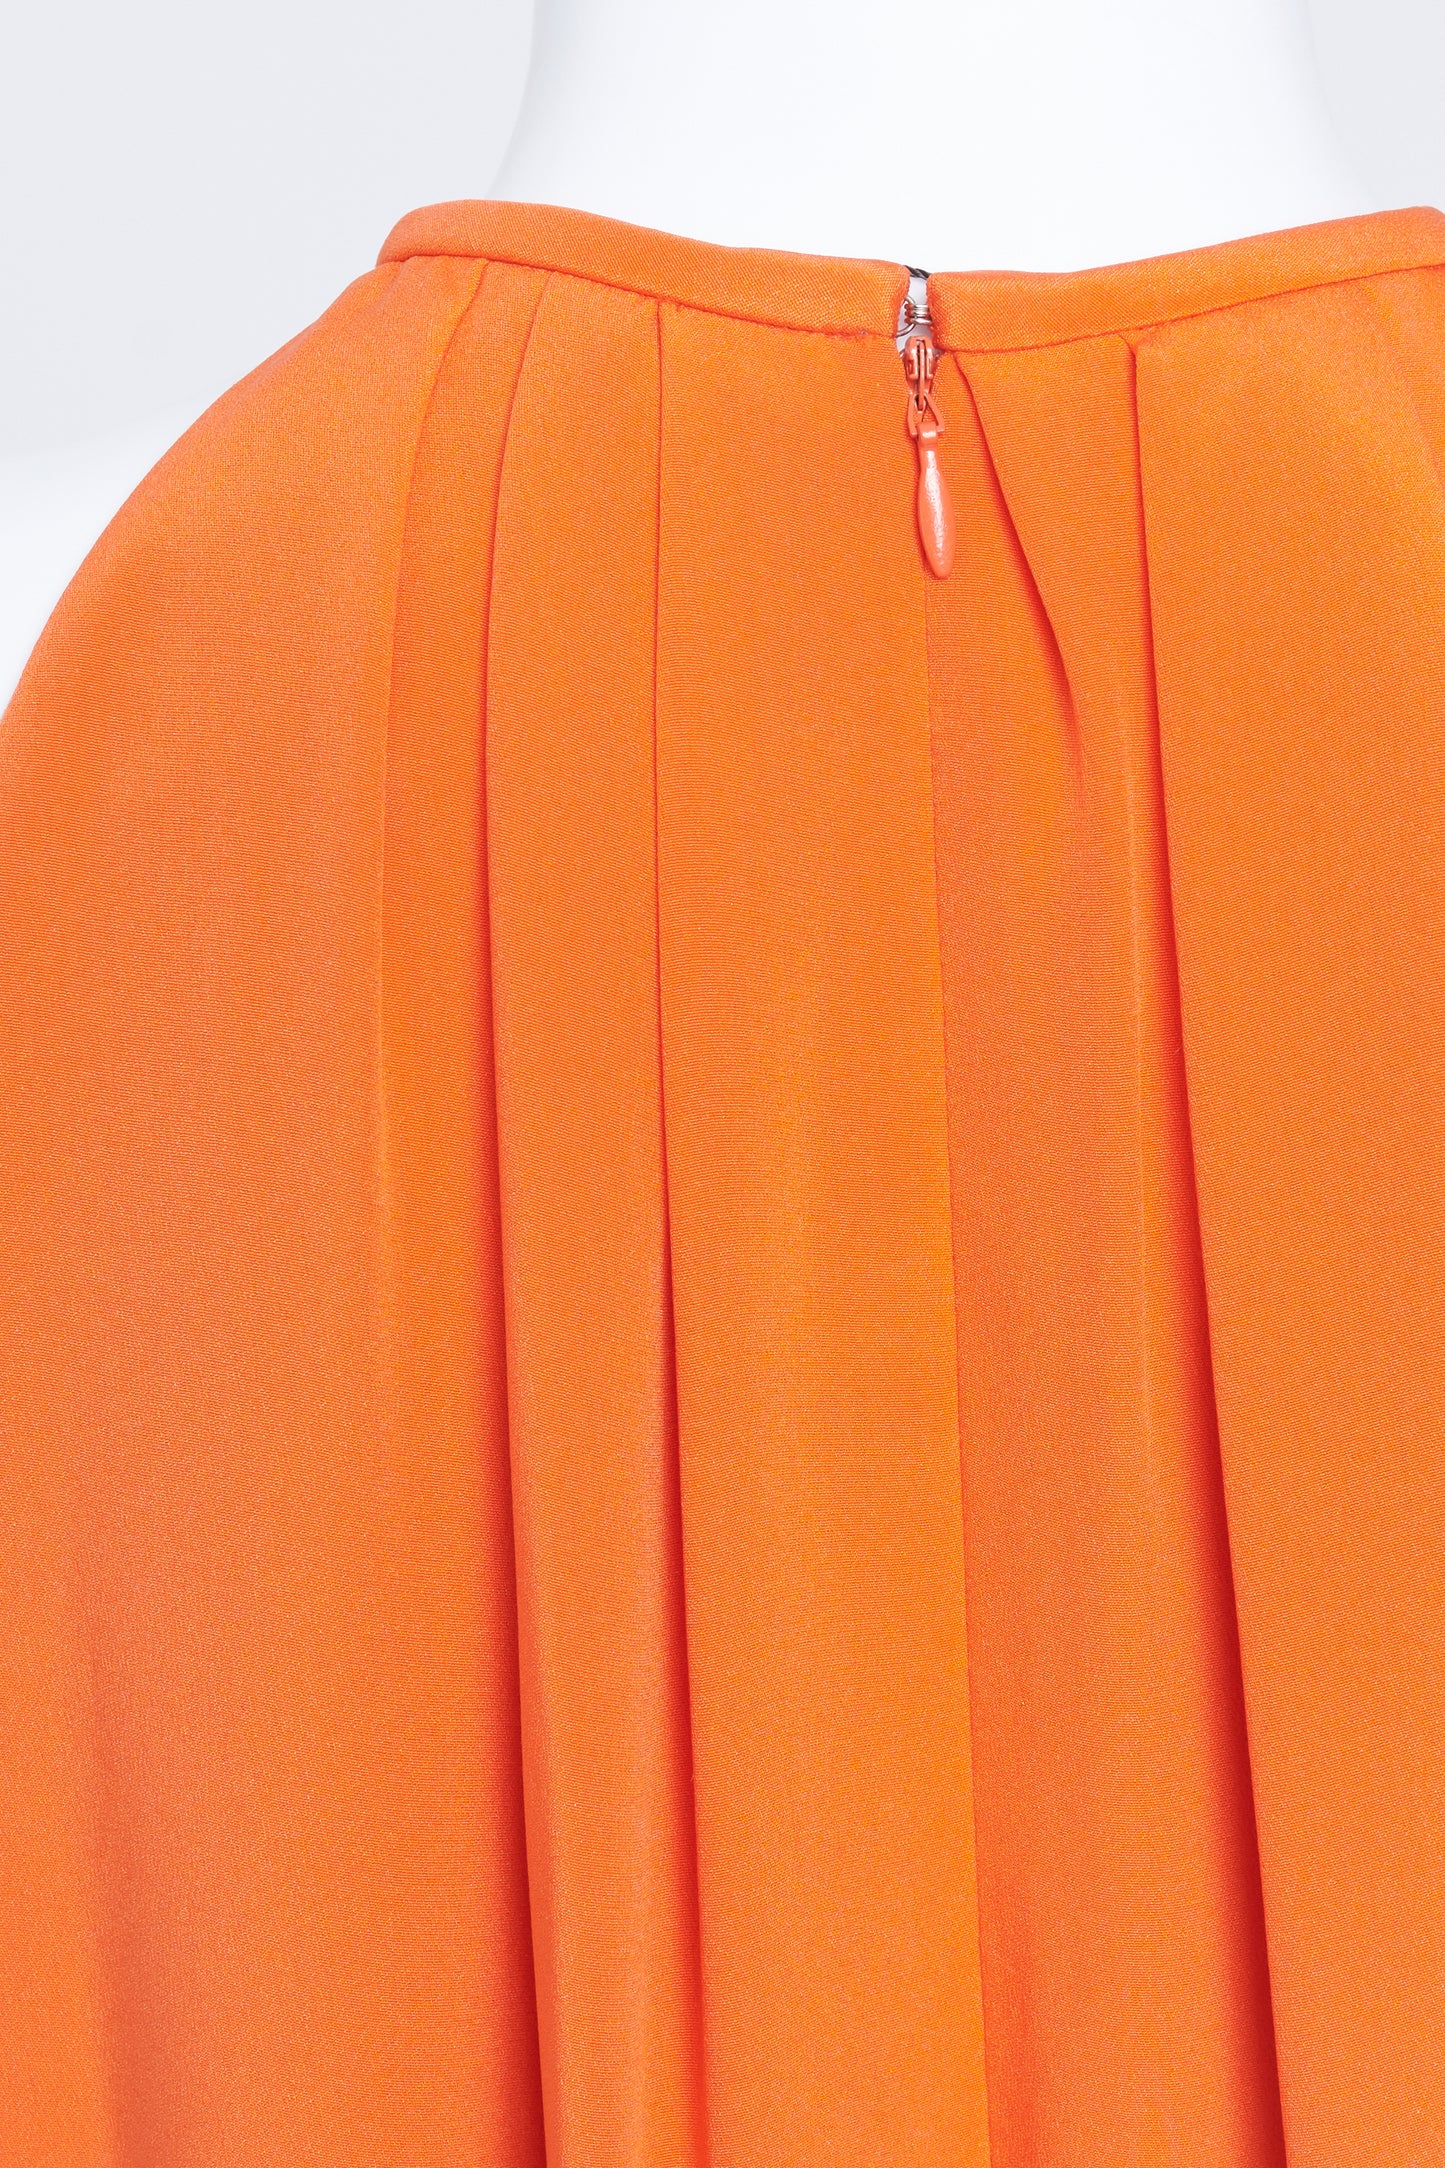 Orange Silk Pleated High-Neck Mini Dress